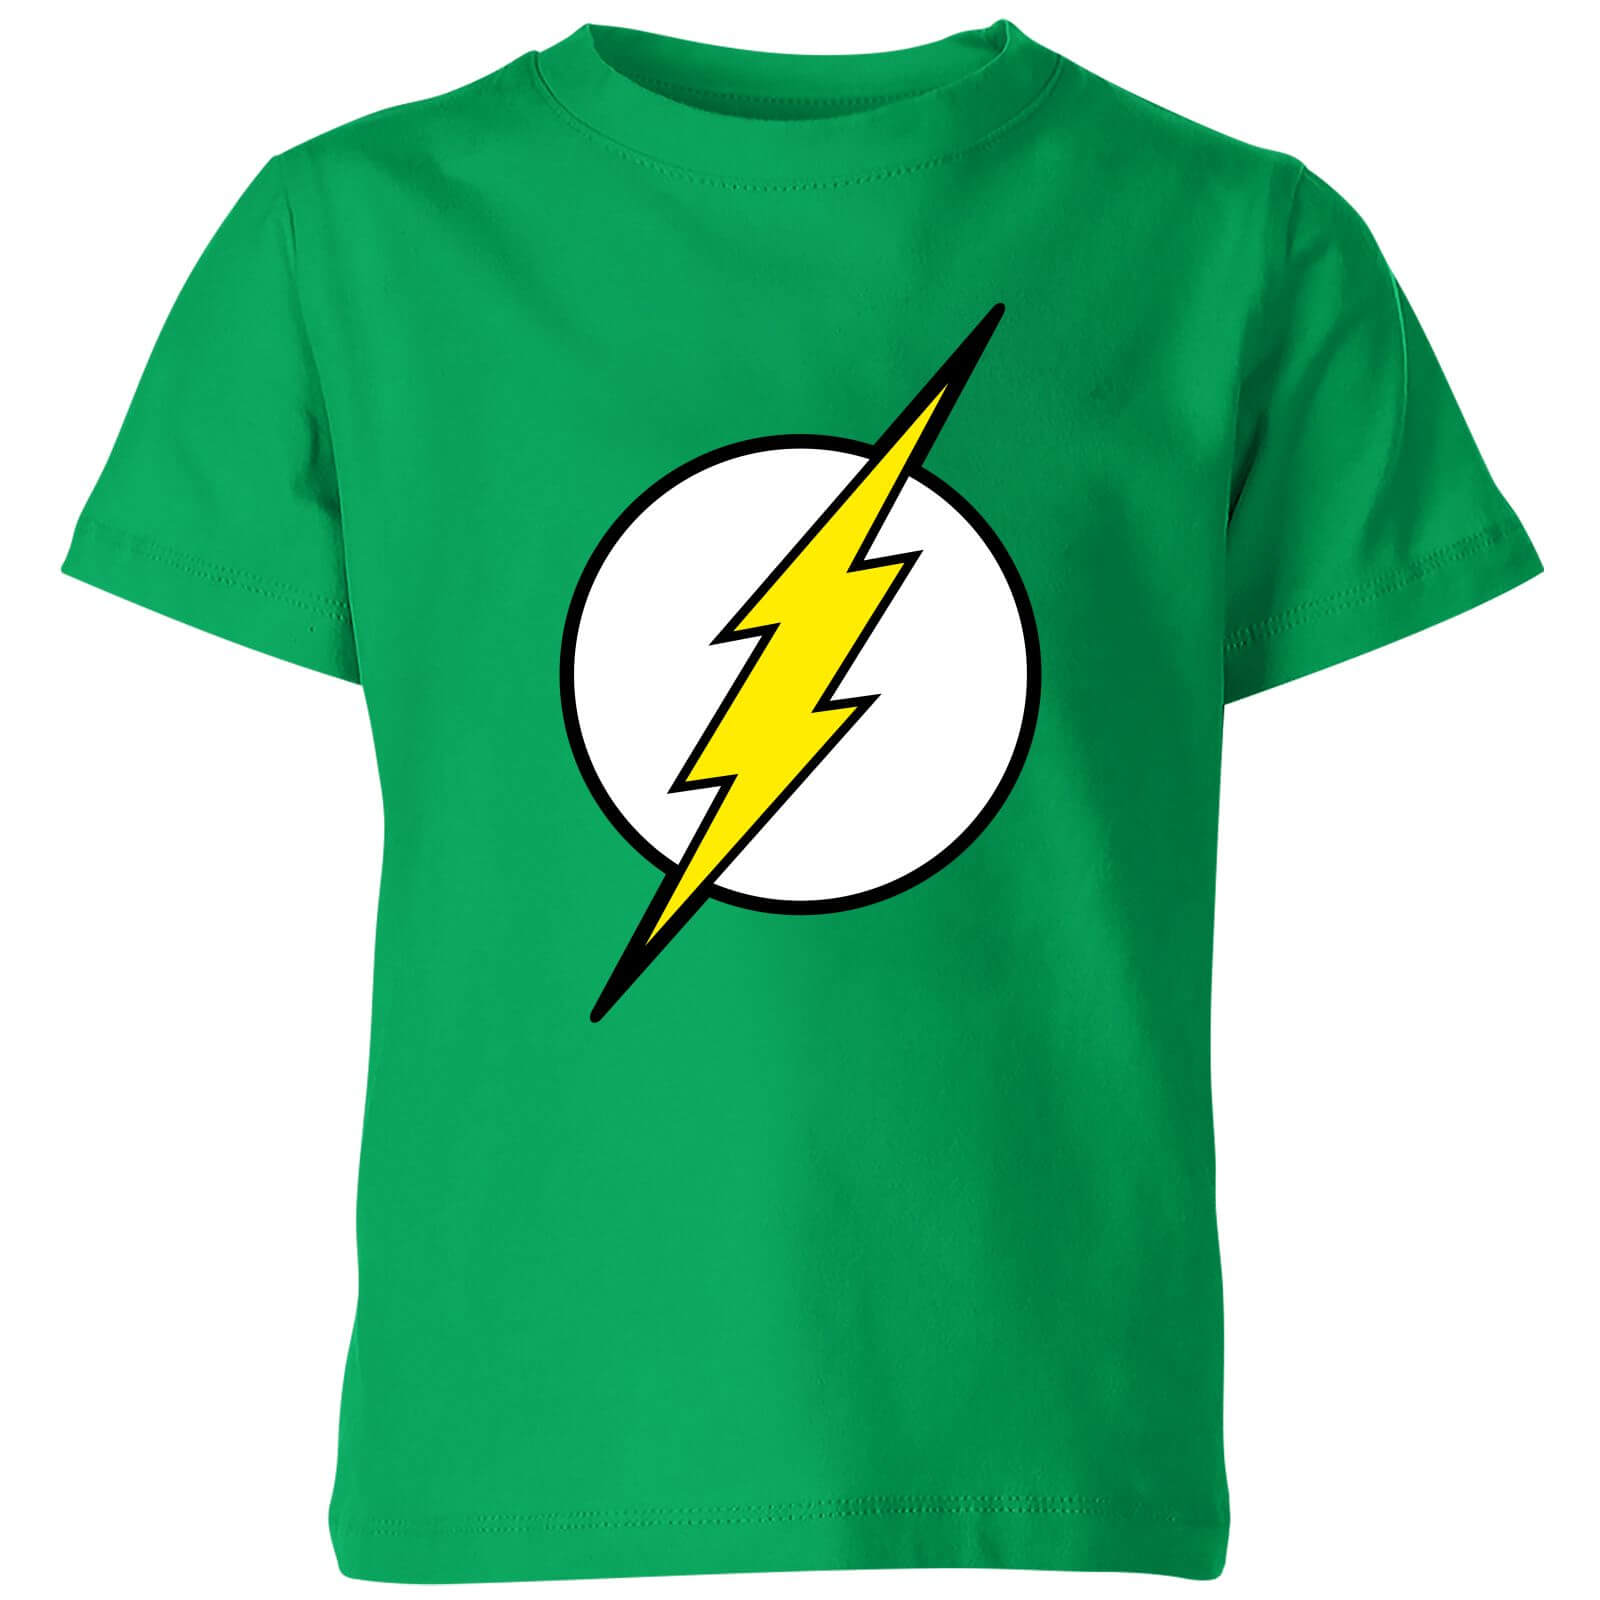 Justice League Flash Logo Kids' T-Shirt - Green - 7-8 Jahre - Grün